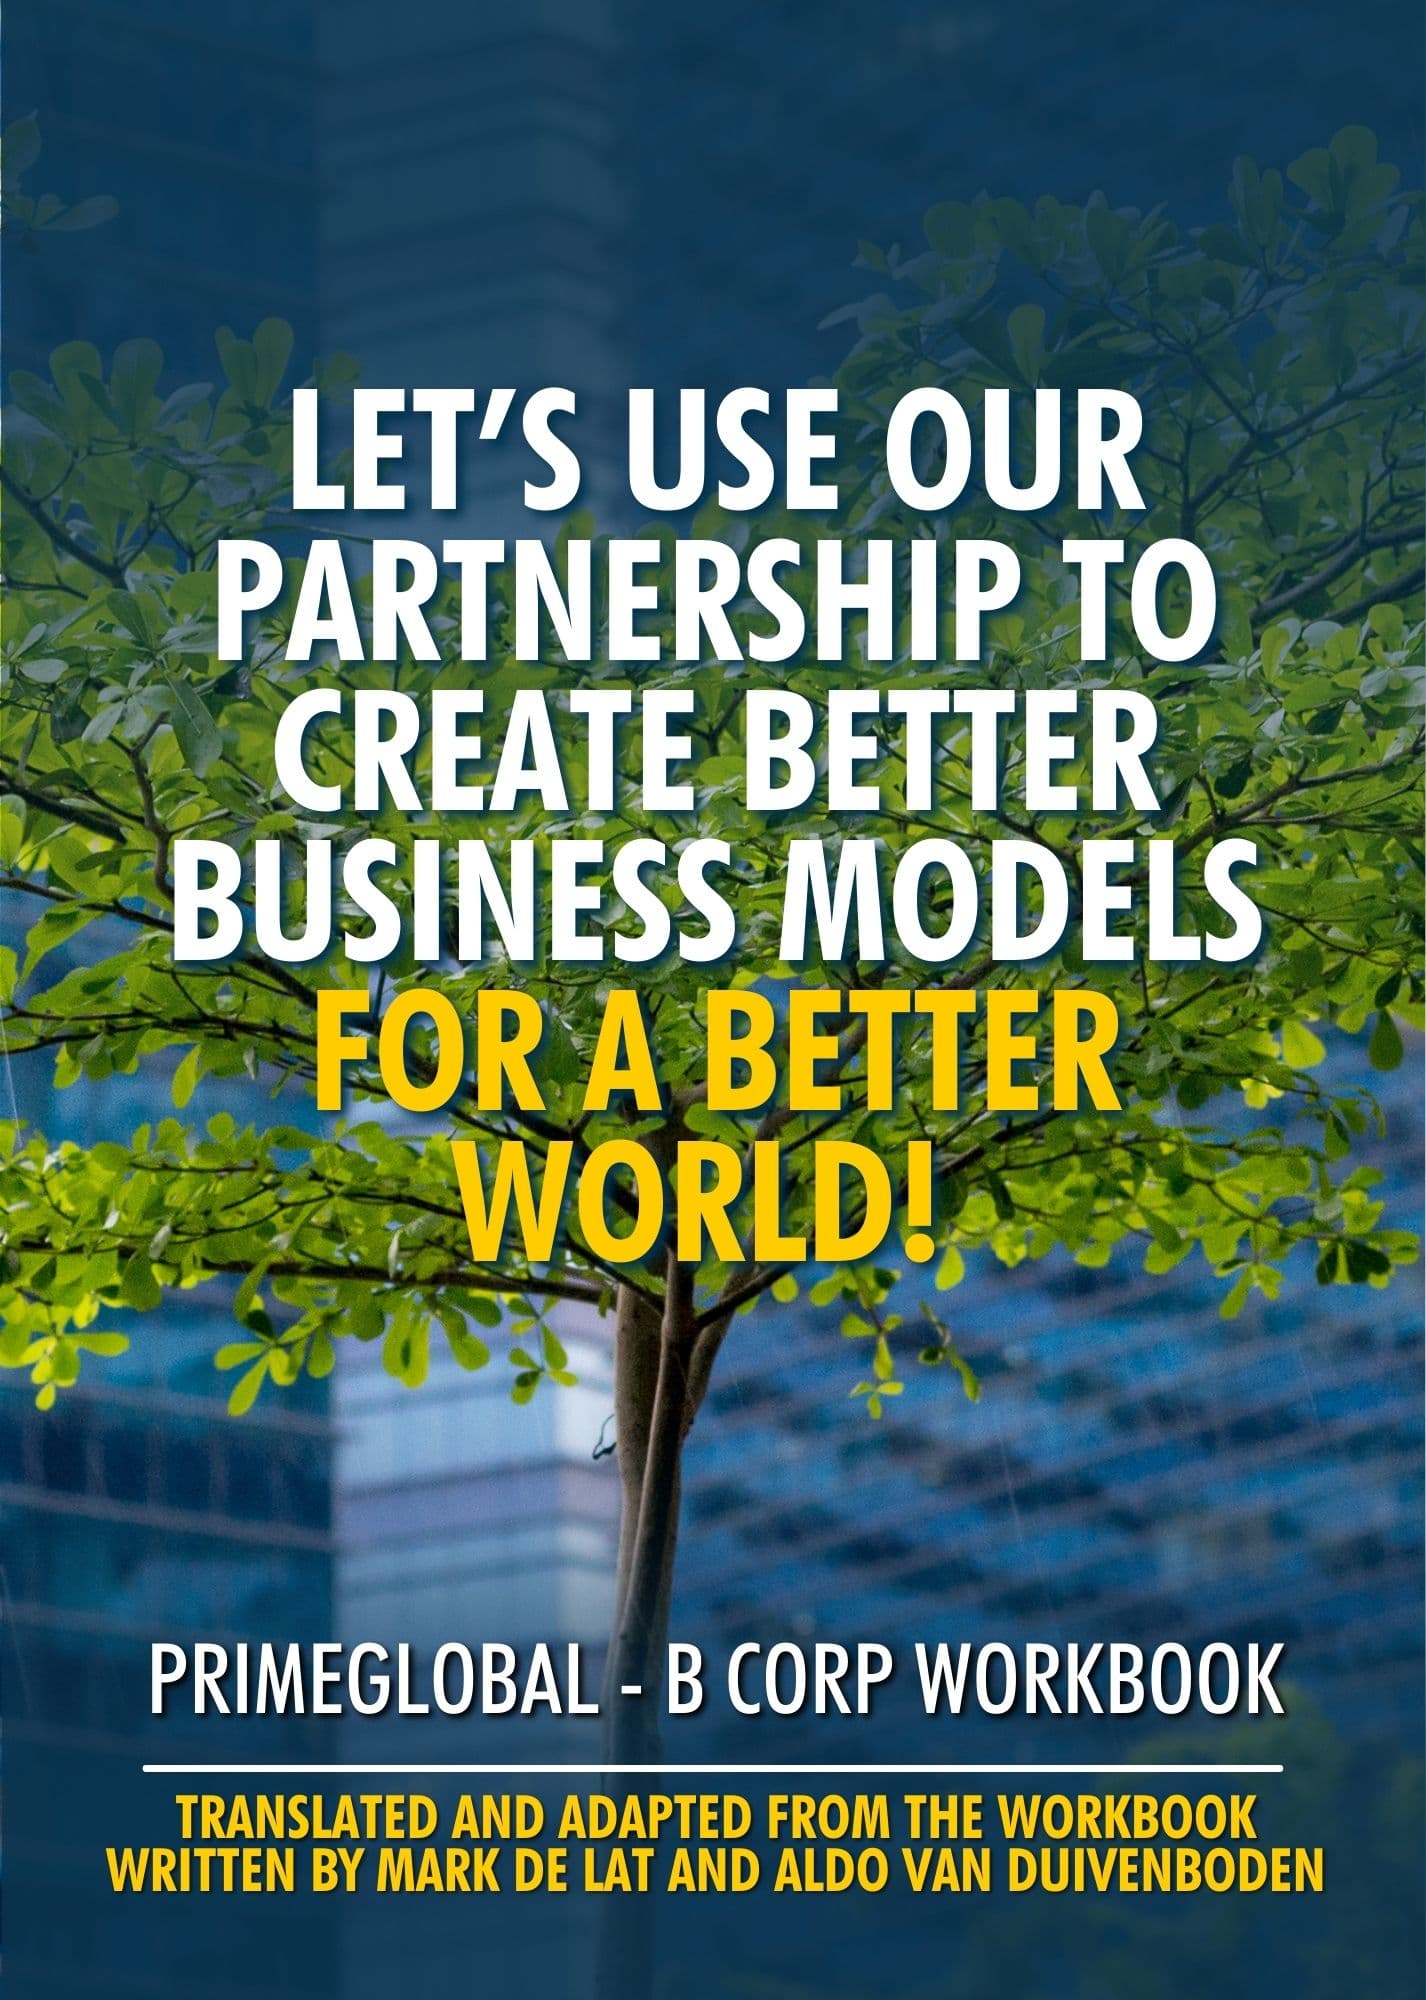 B Corp Workbook PrimeGlobal